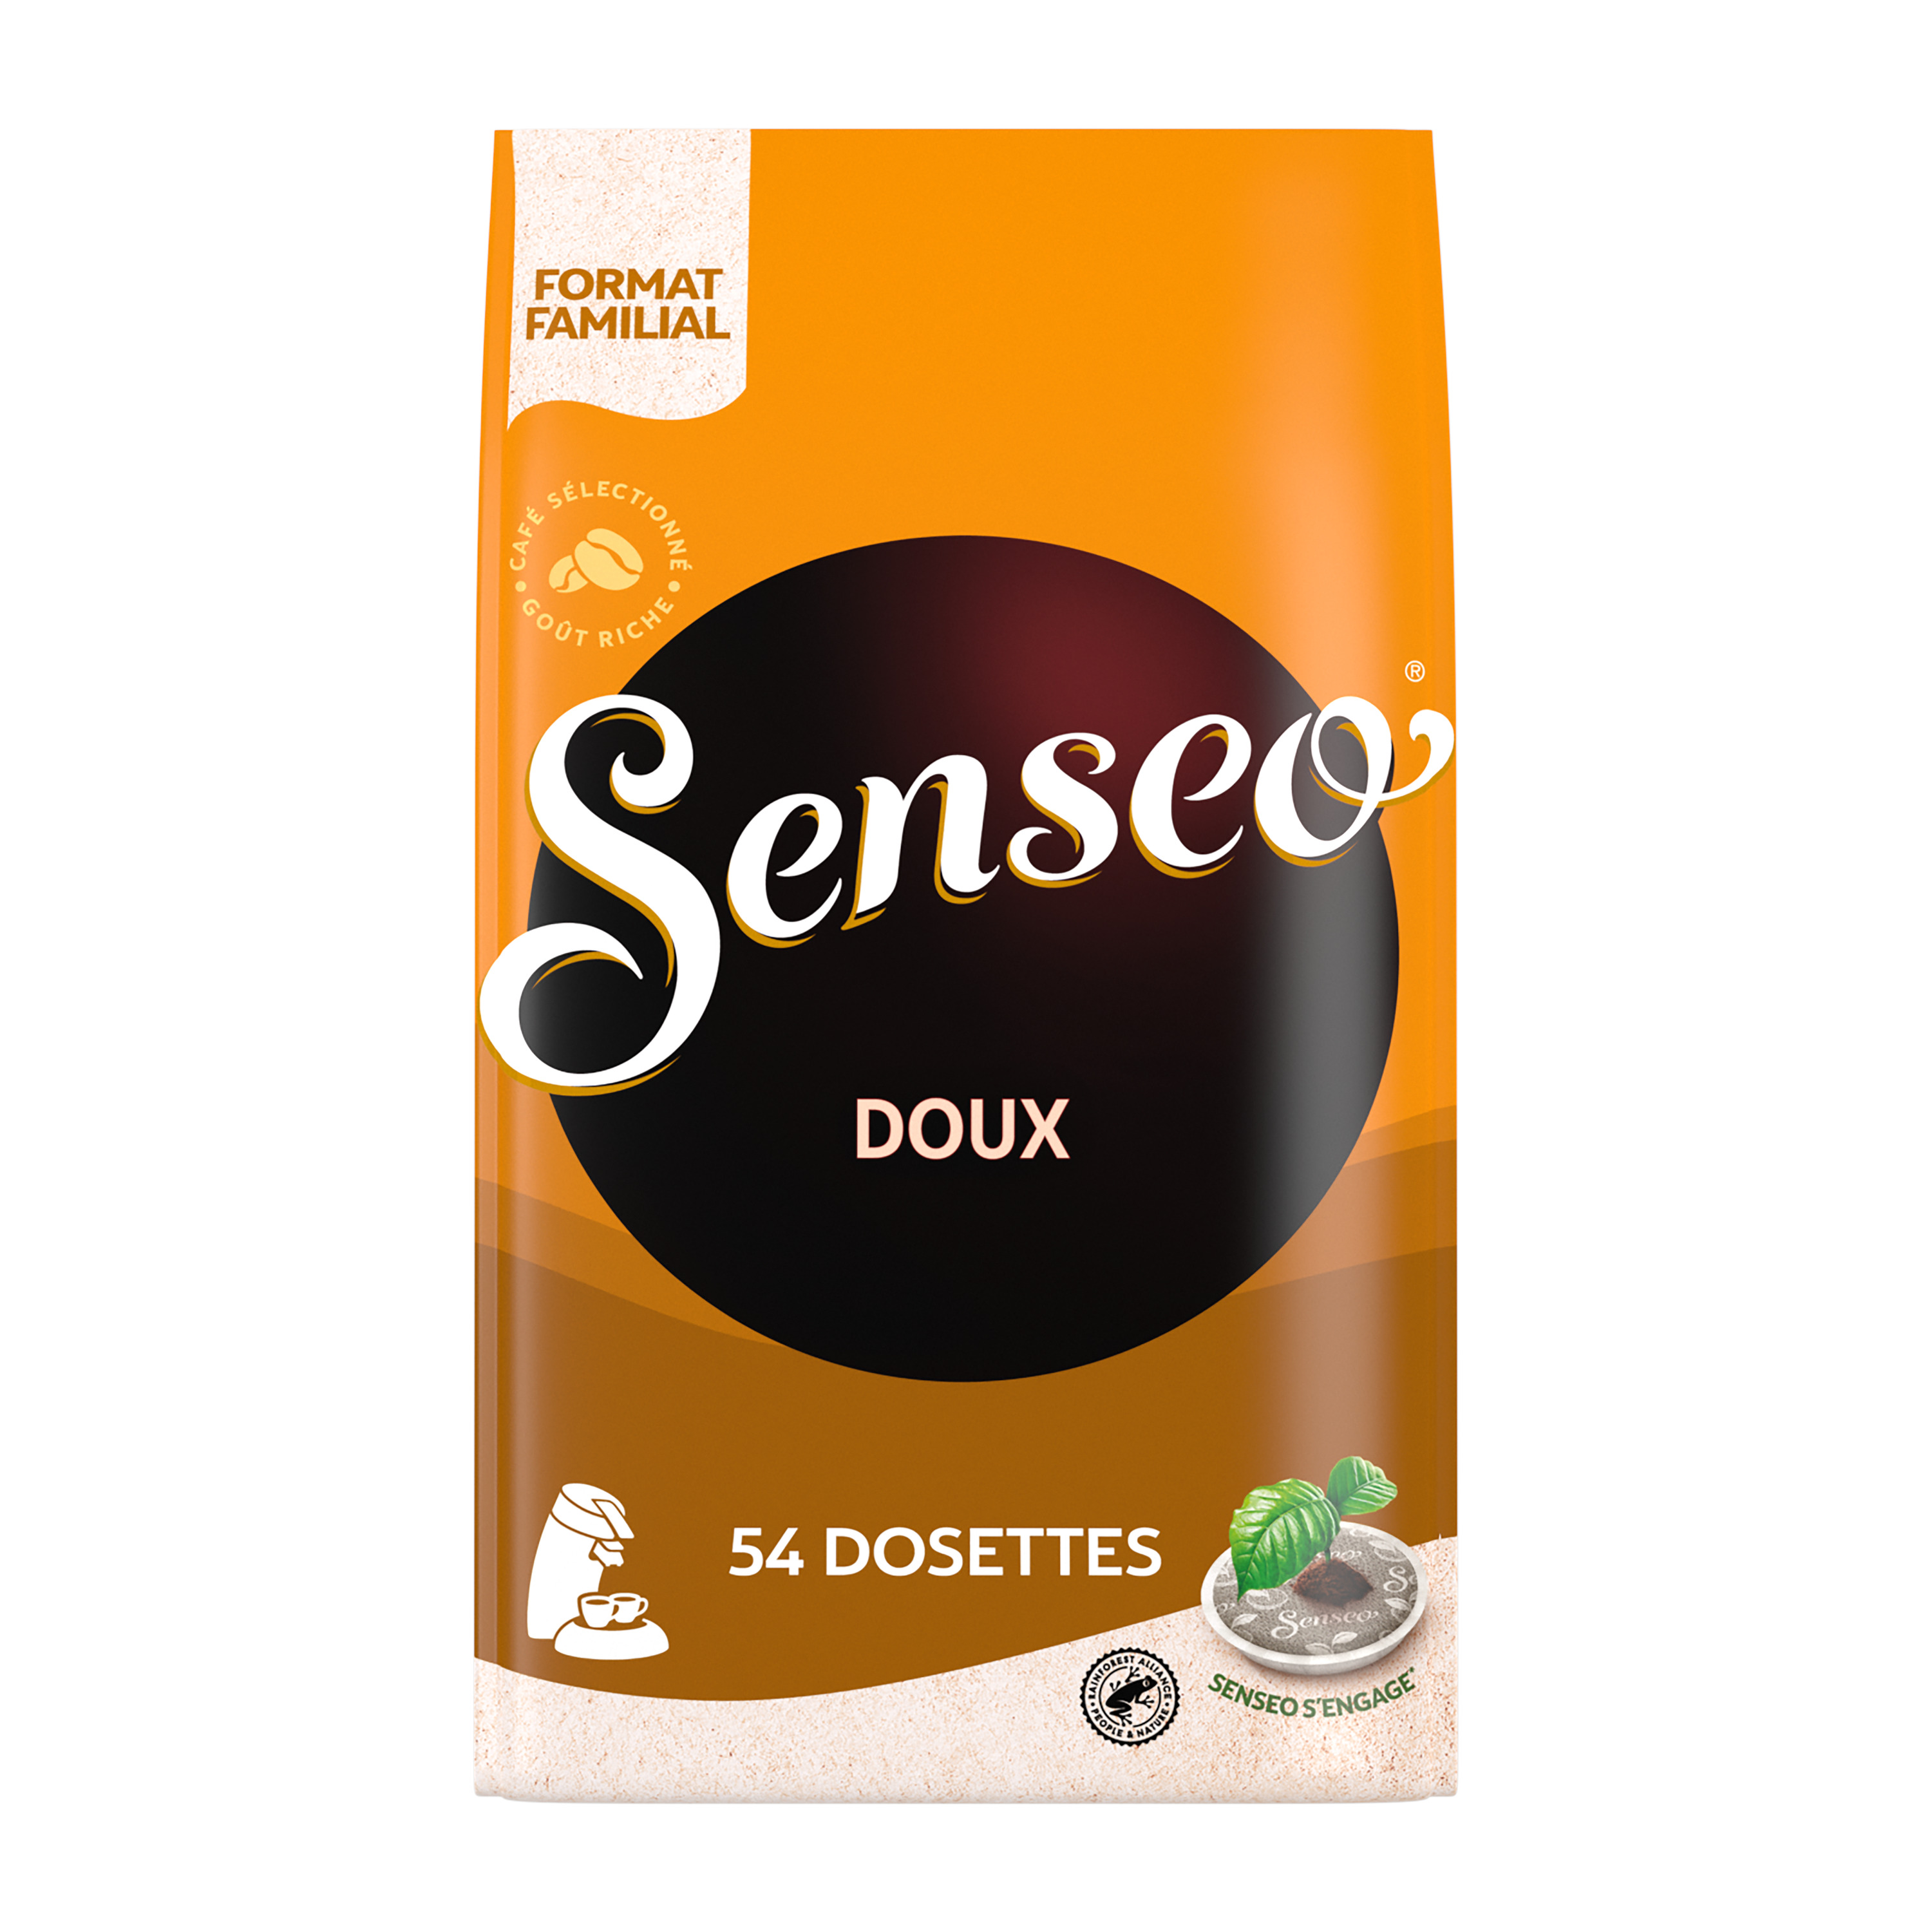 Senseo Doux - 54 dosettes pour Senseo à 6,79 €